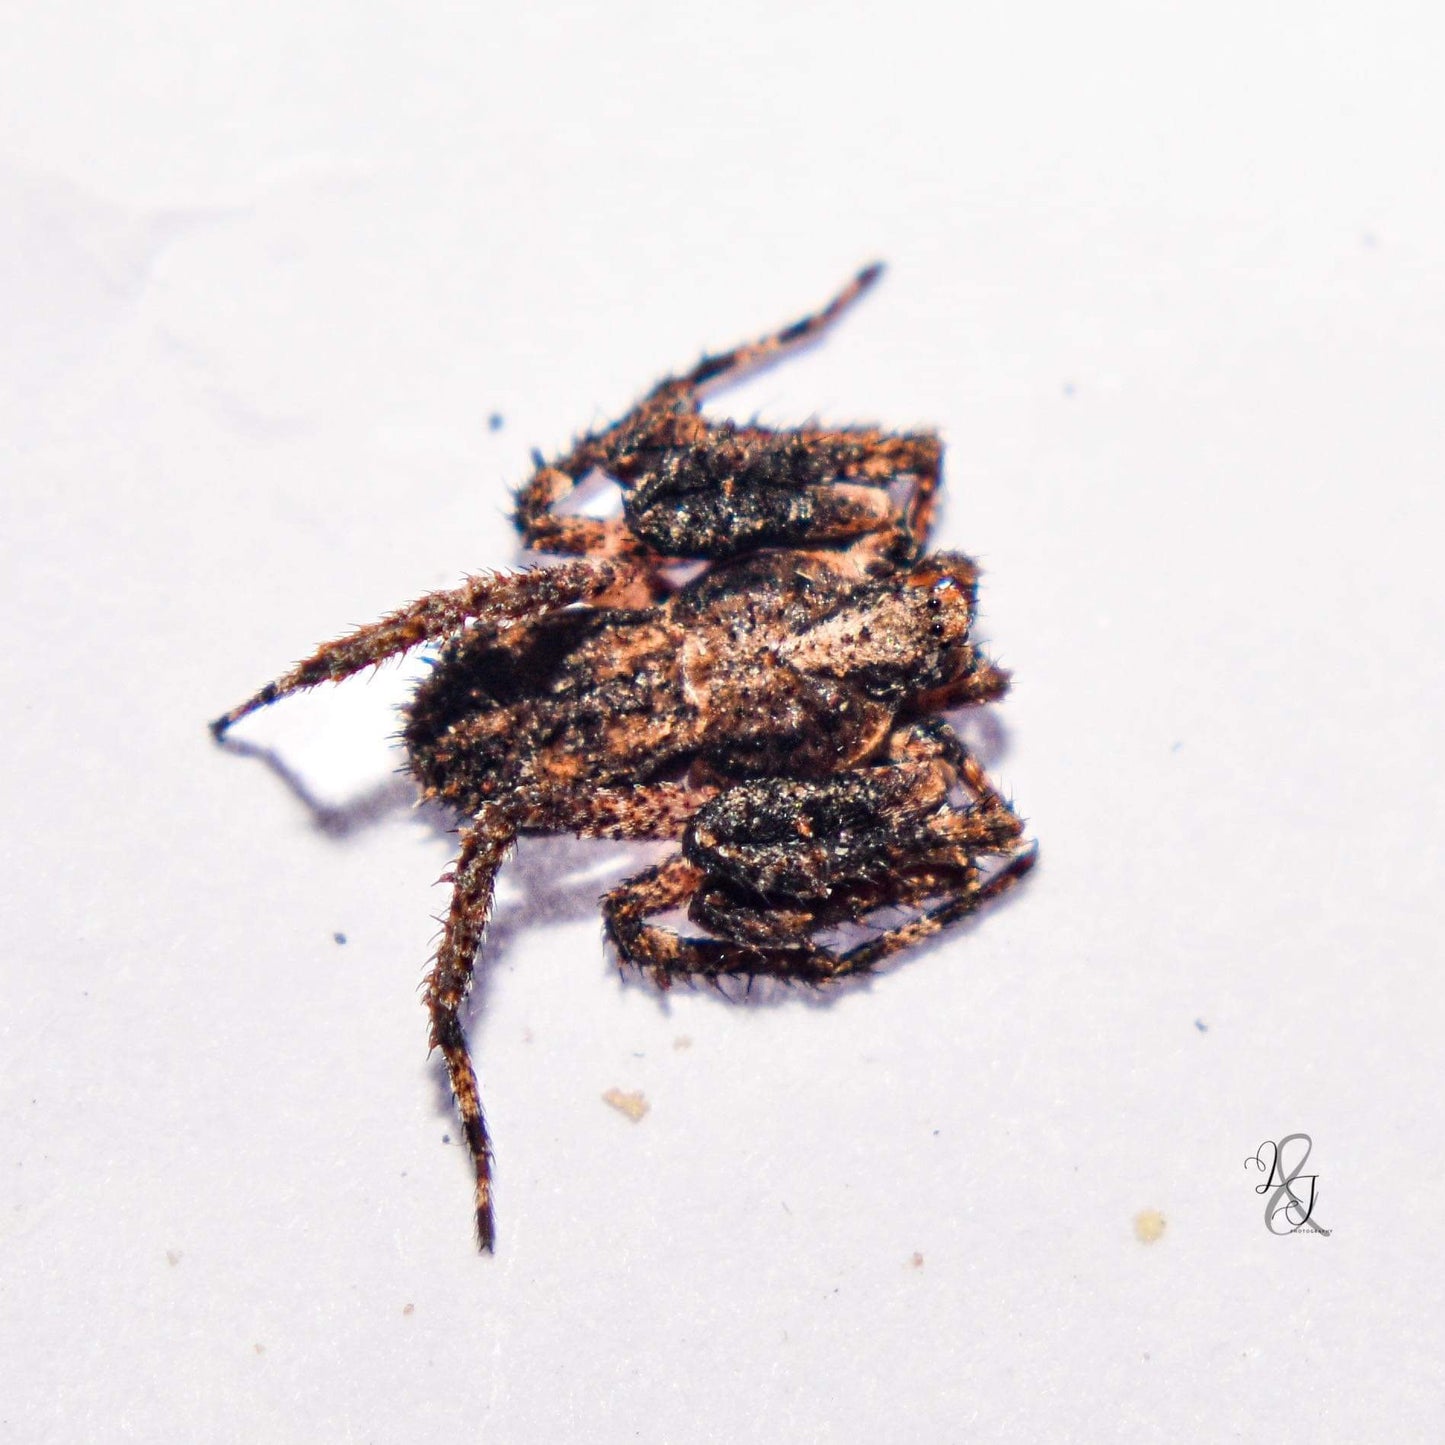 Cryptic Crab Spider (Stephanopis sp.)